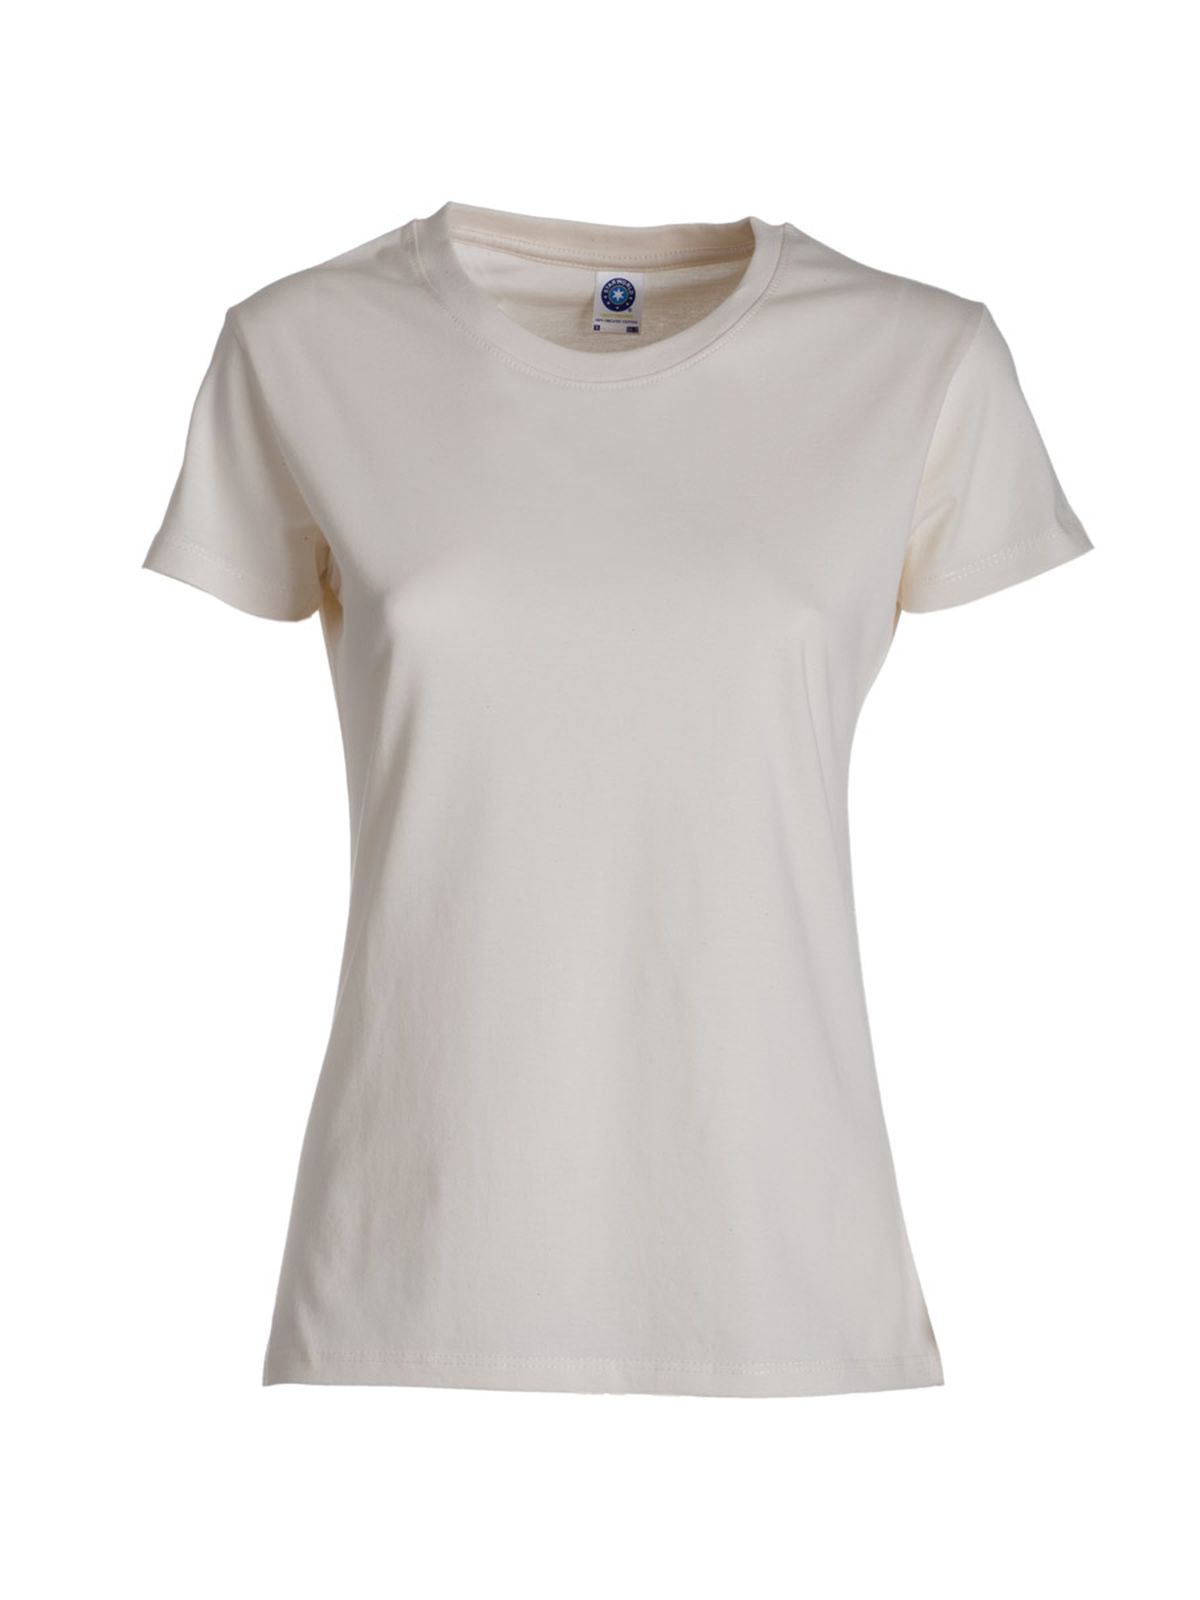 gold-label-ladies-retail-t-shirt-natural.webp